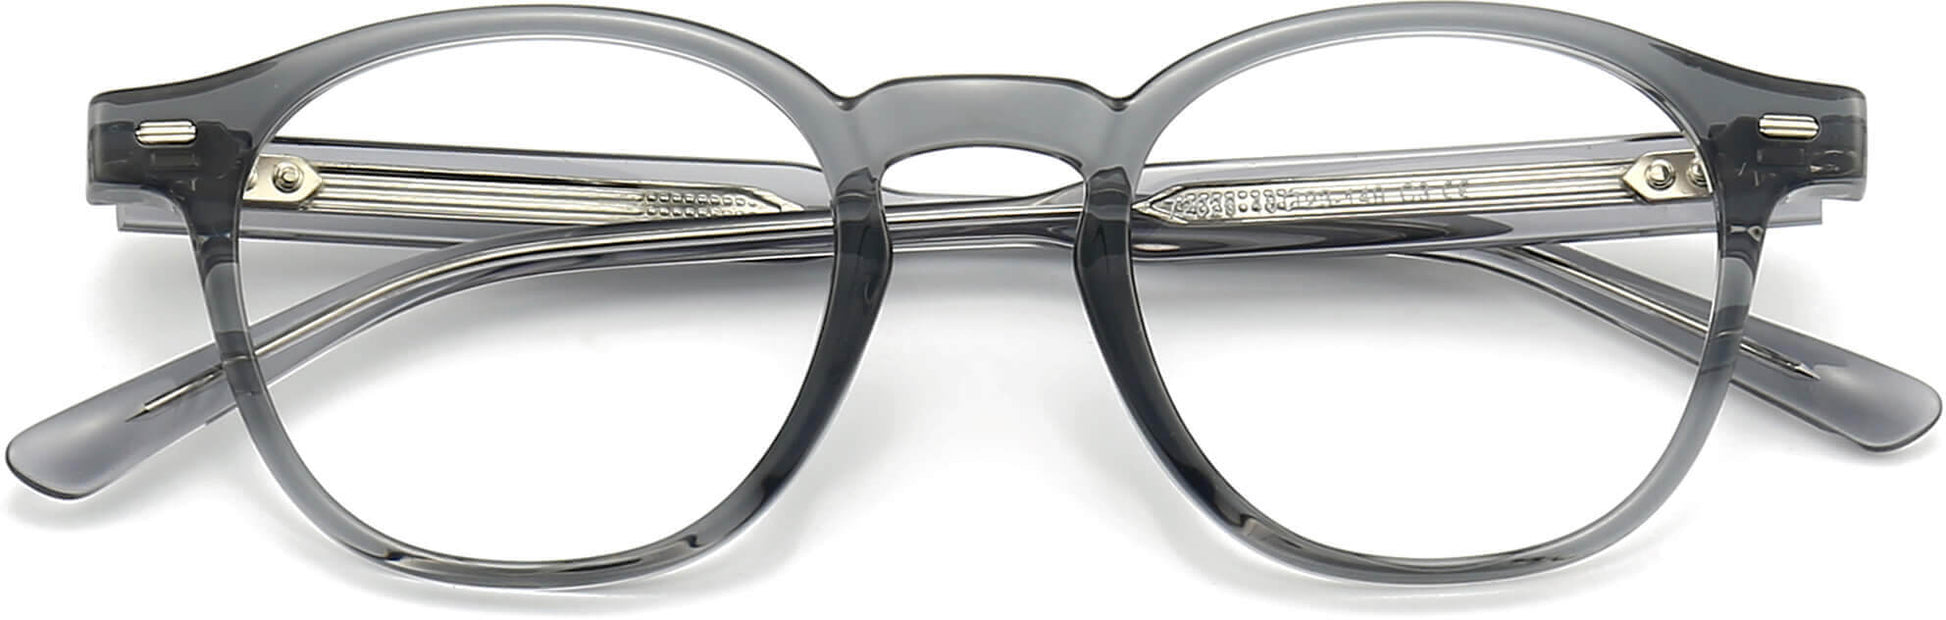 Jonas Round Gray Eyeglasses from ANRRI, closed view